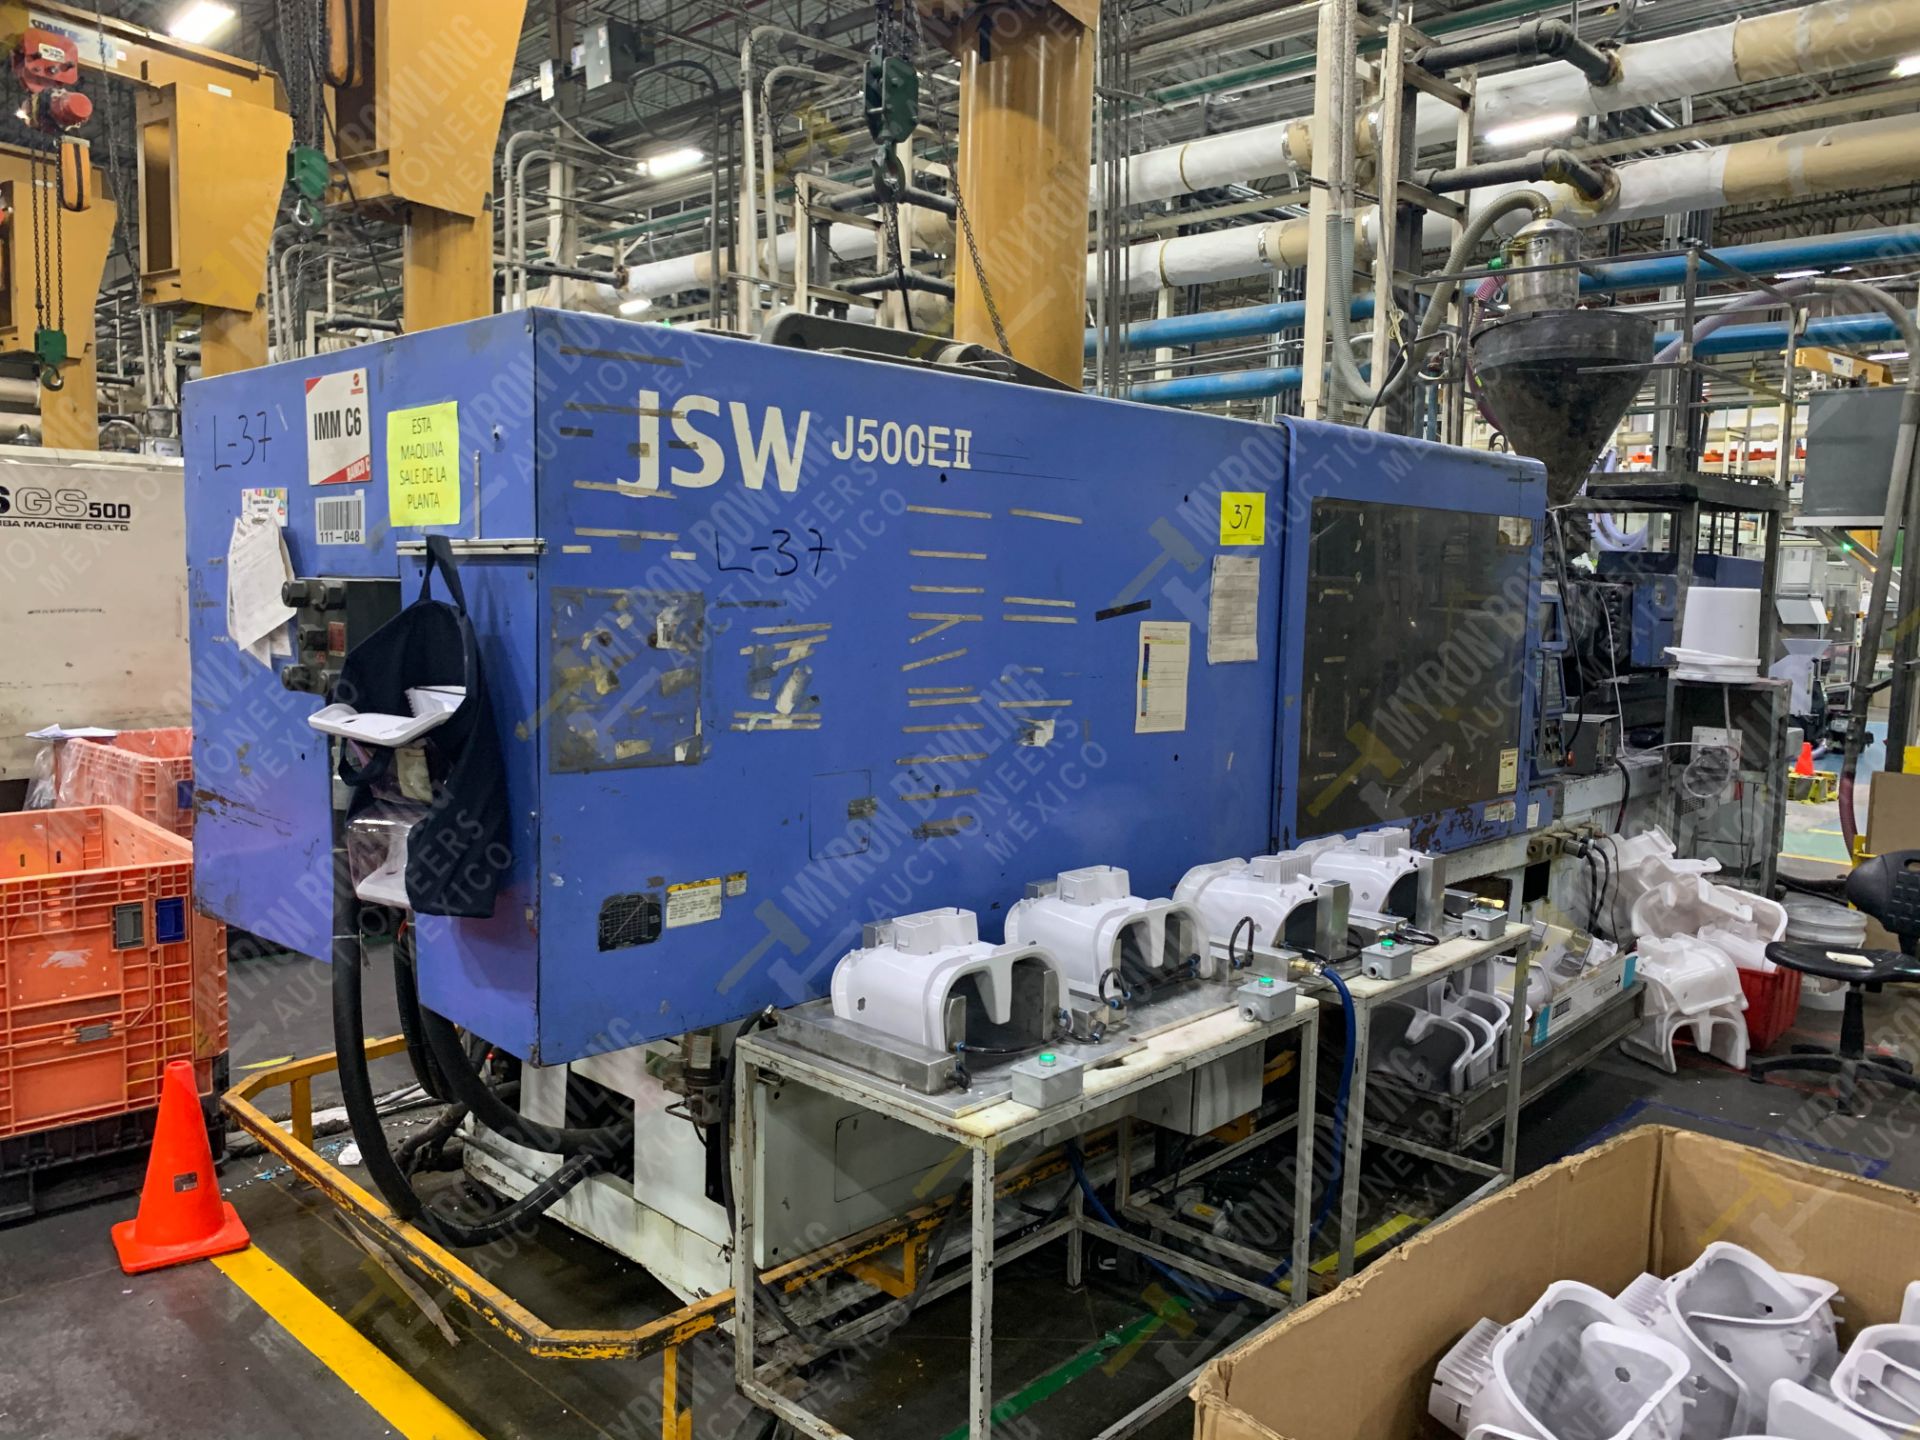 500 TON JSW J500ELL PLASTIC INJECTION MOLDING MACHINE, MFG YEAR 1997 - Image 3 of 24